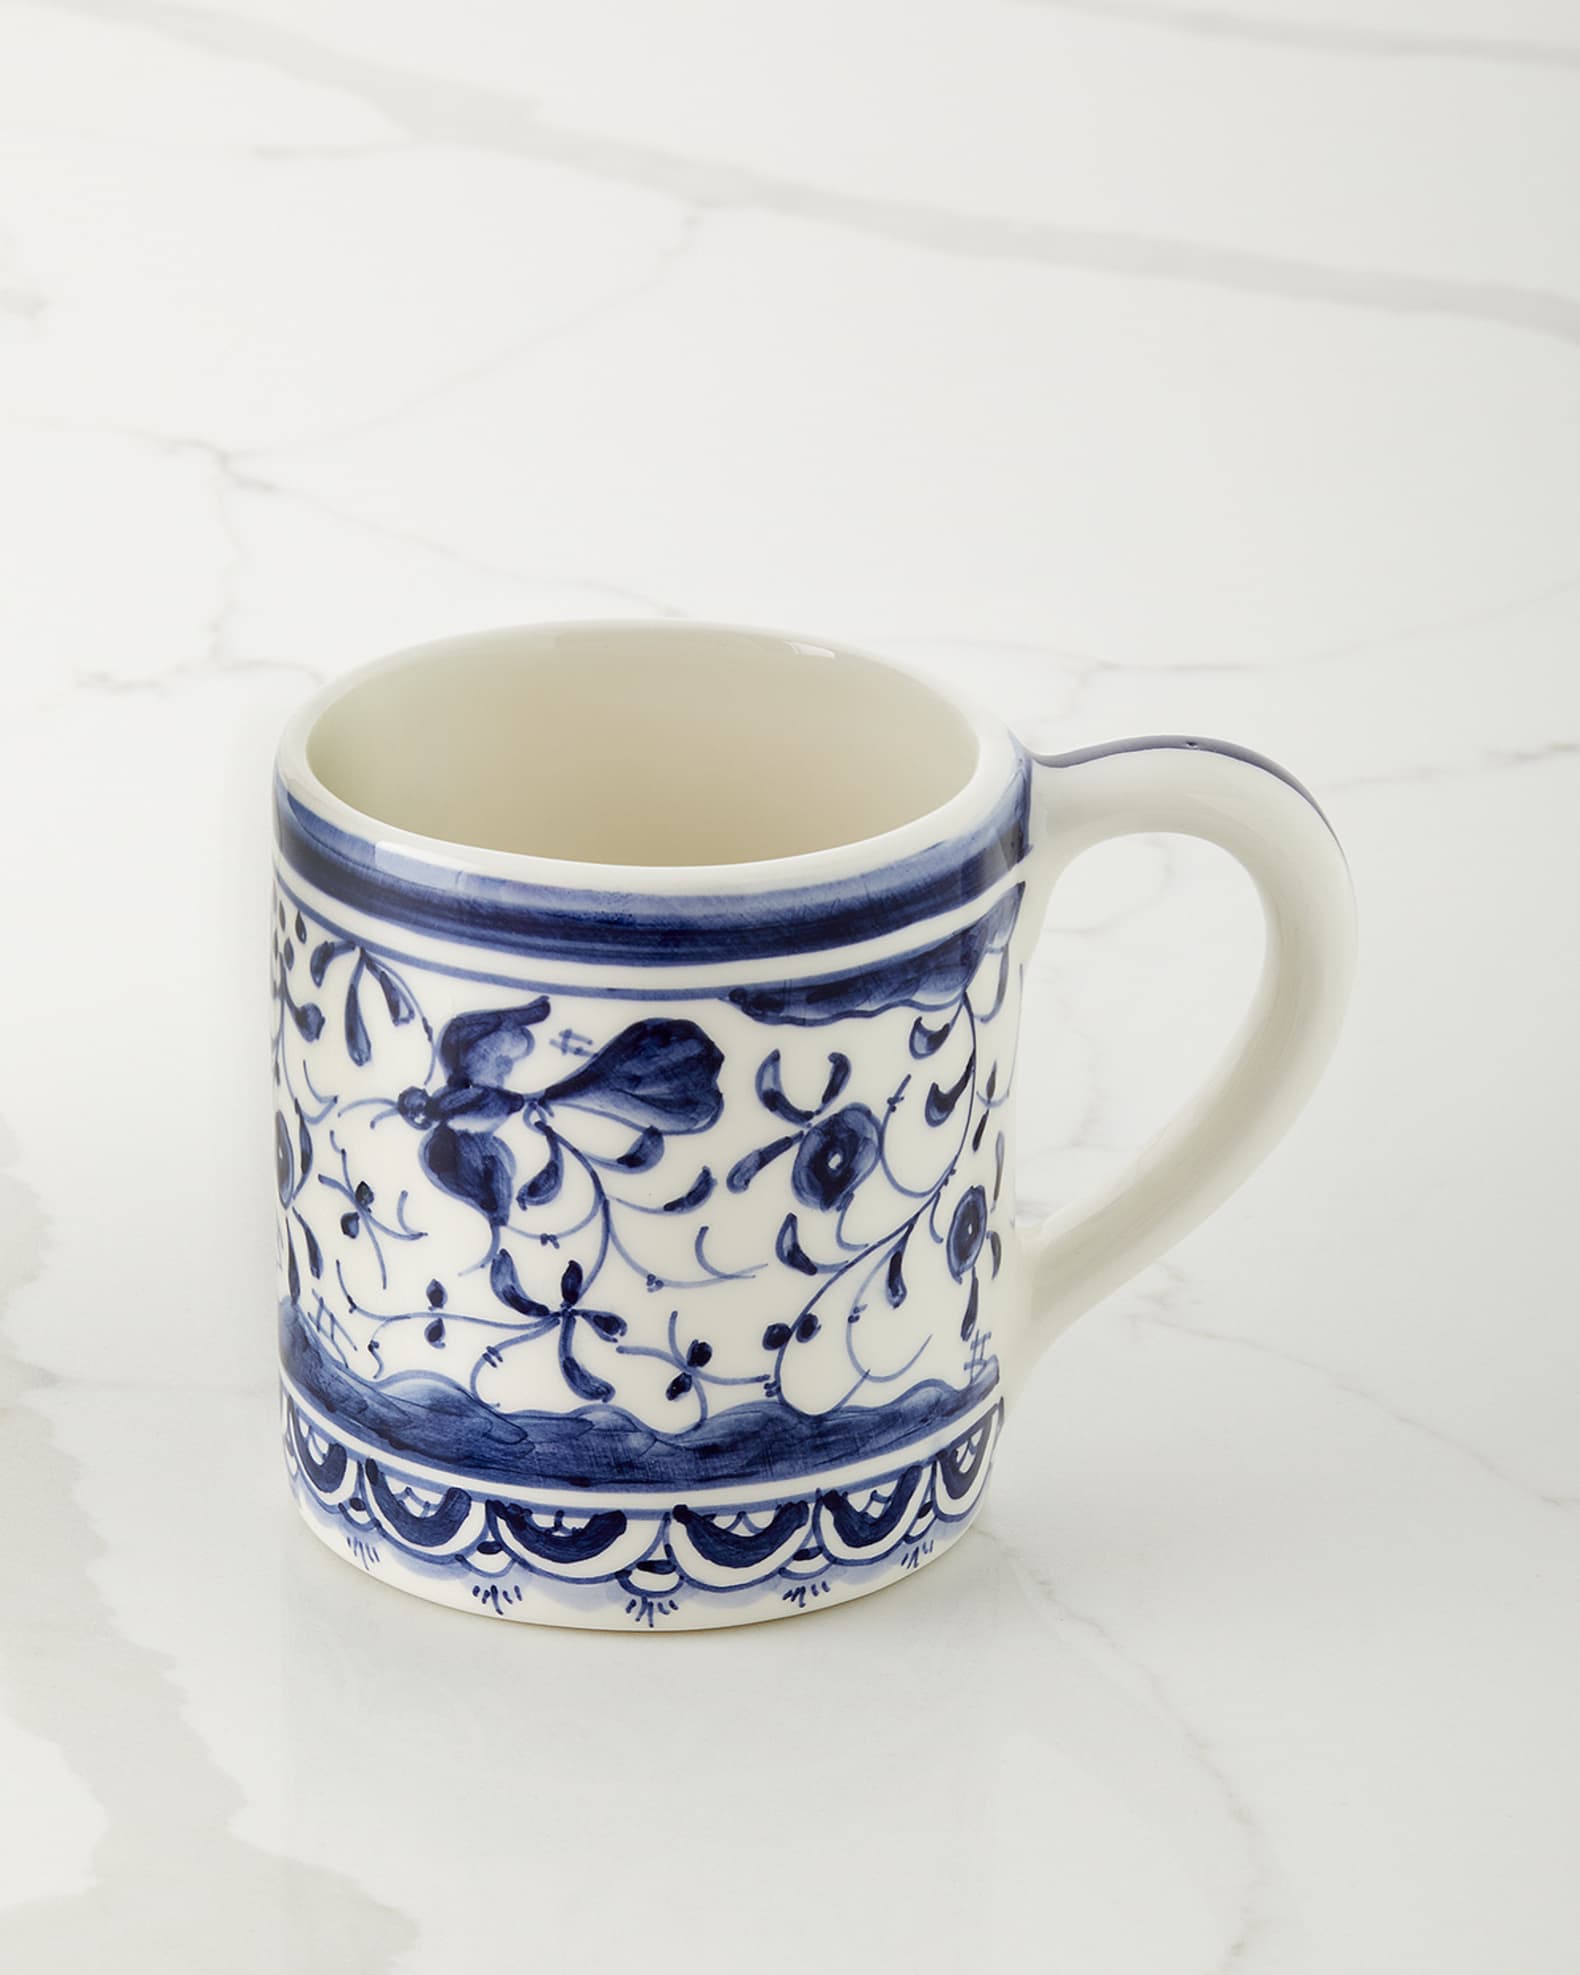 Designer Mugs, Cups & Saucers at Neiman Marcus